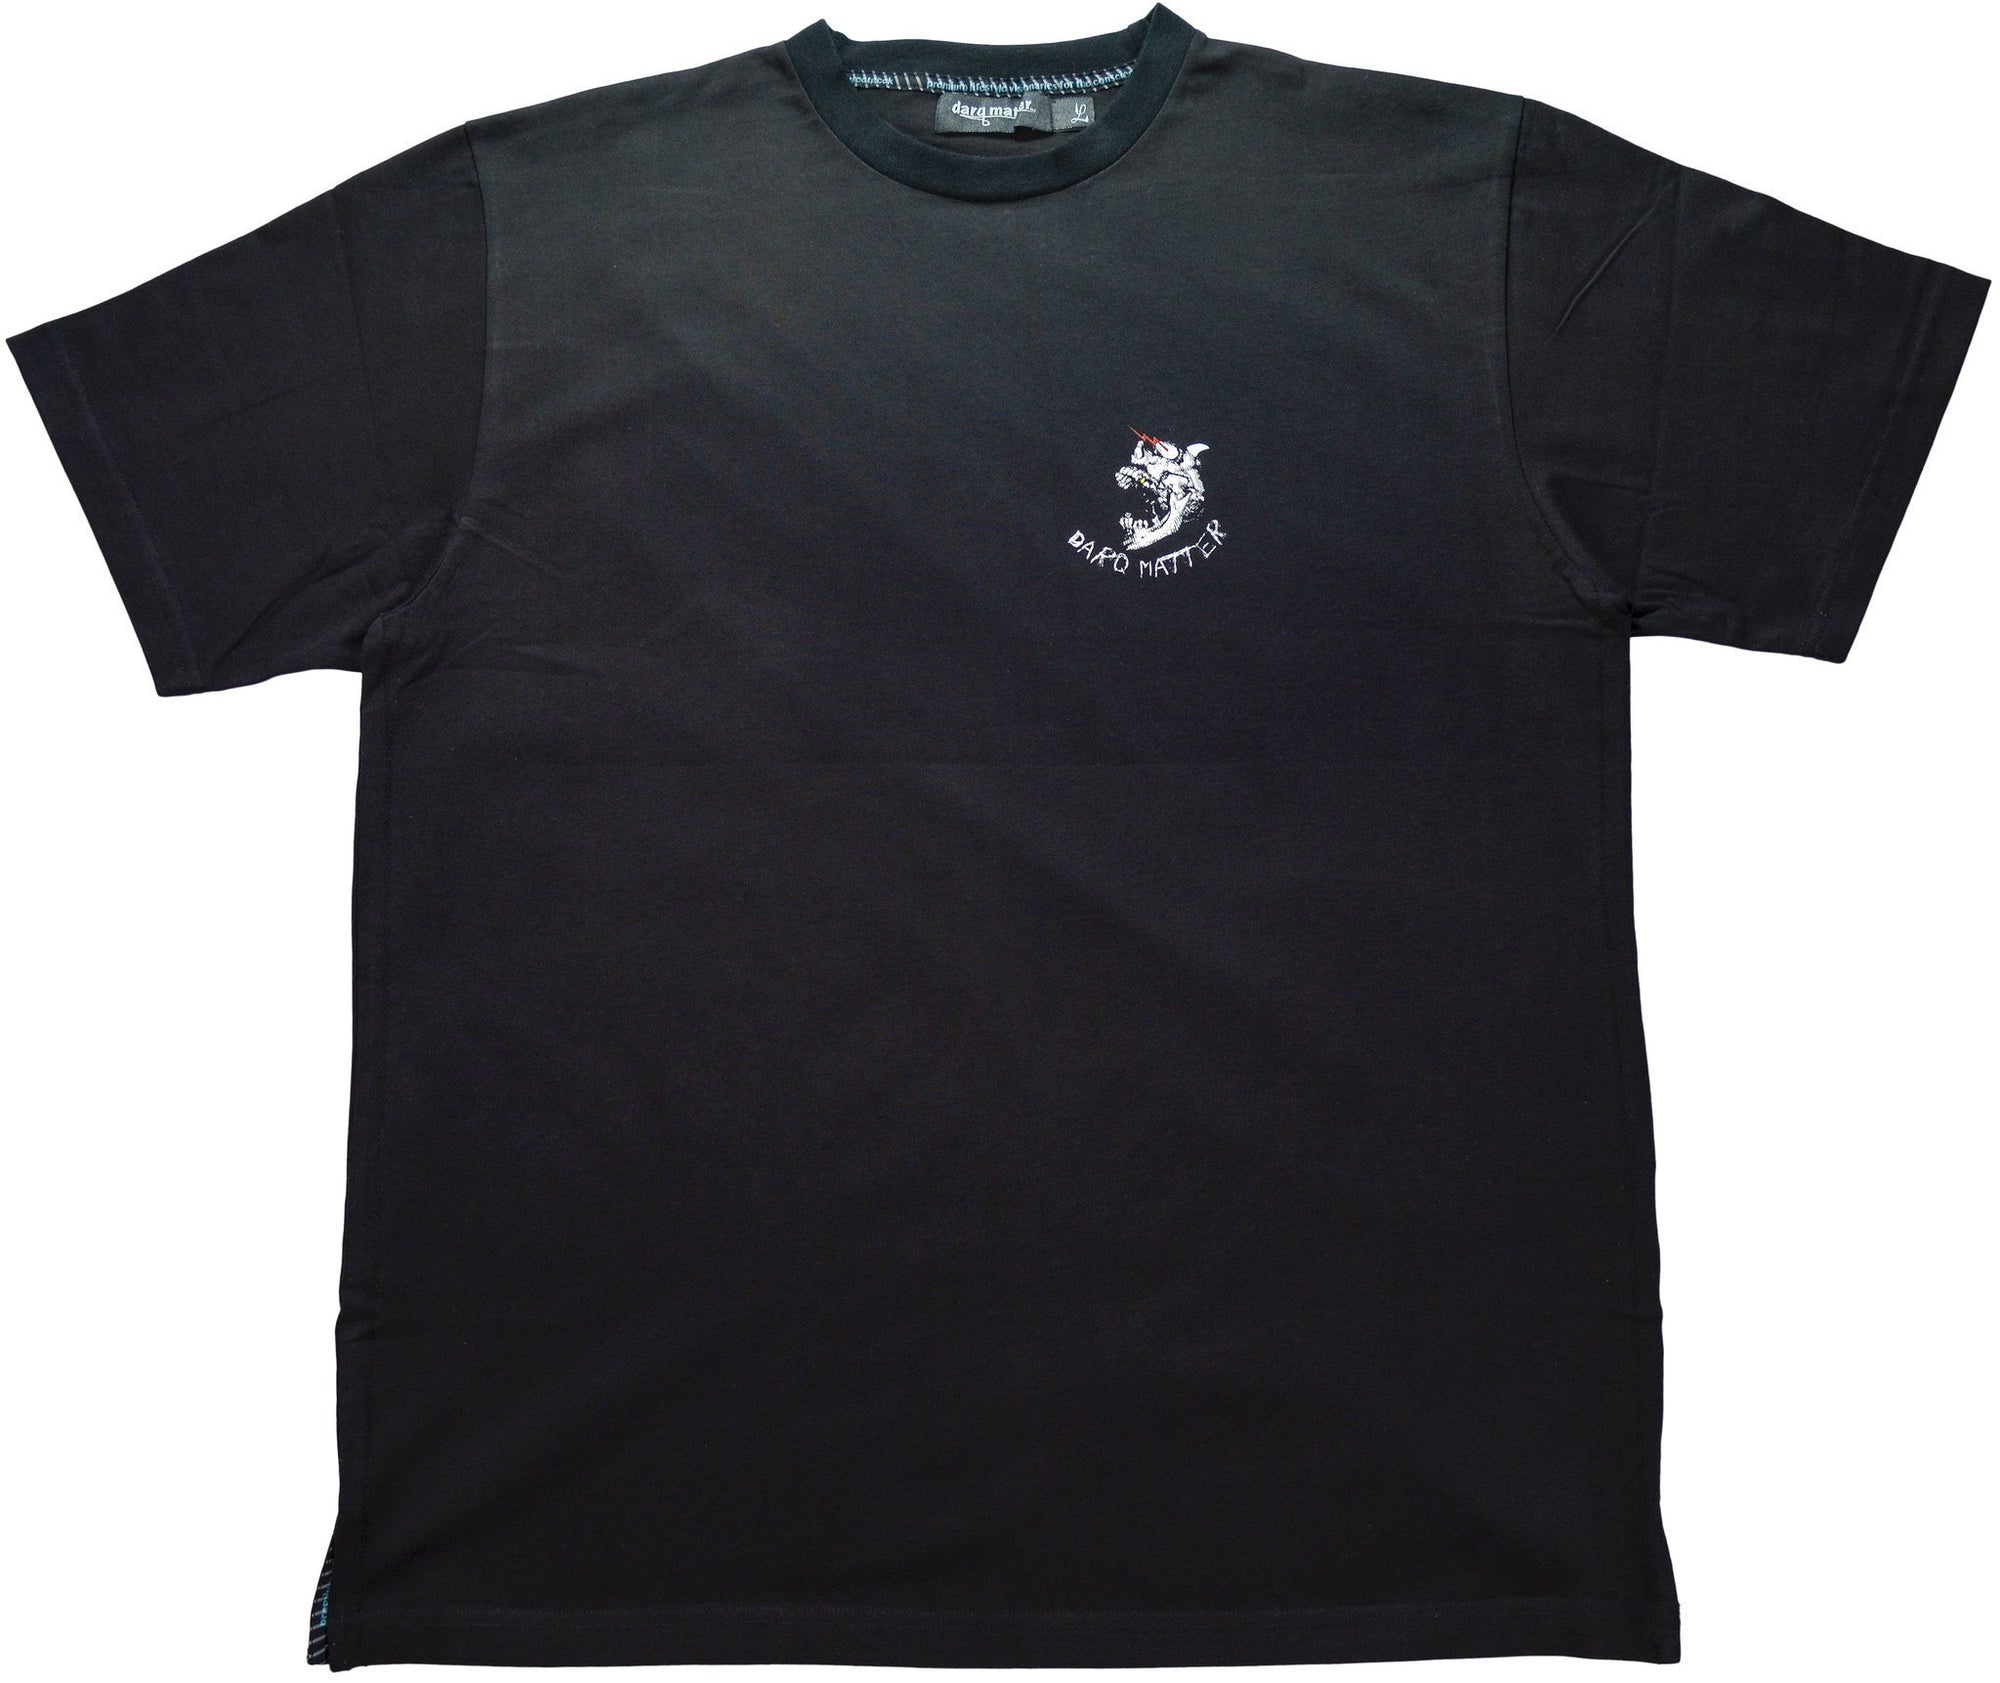 DarqMatterDesign CutnSew T-Shirts Small / Black Rebel Yell